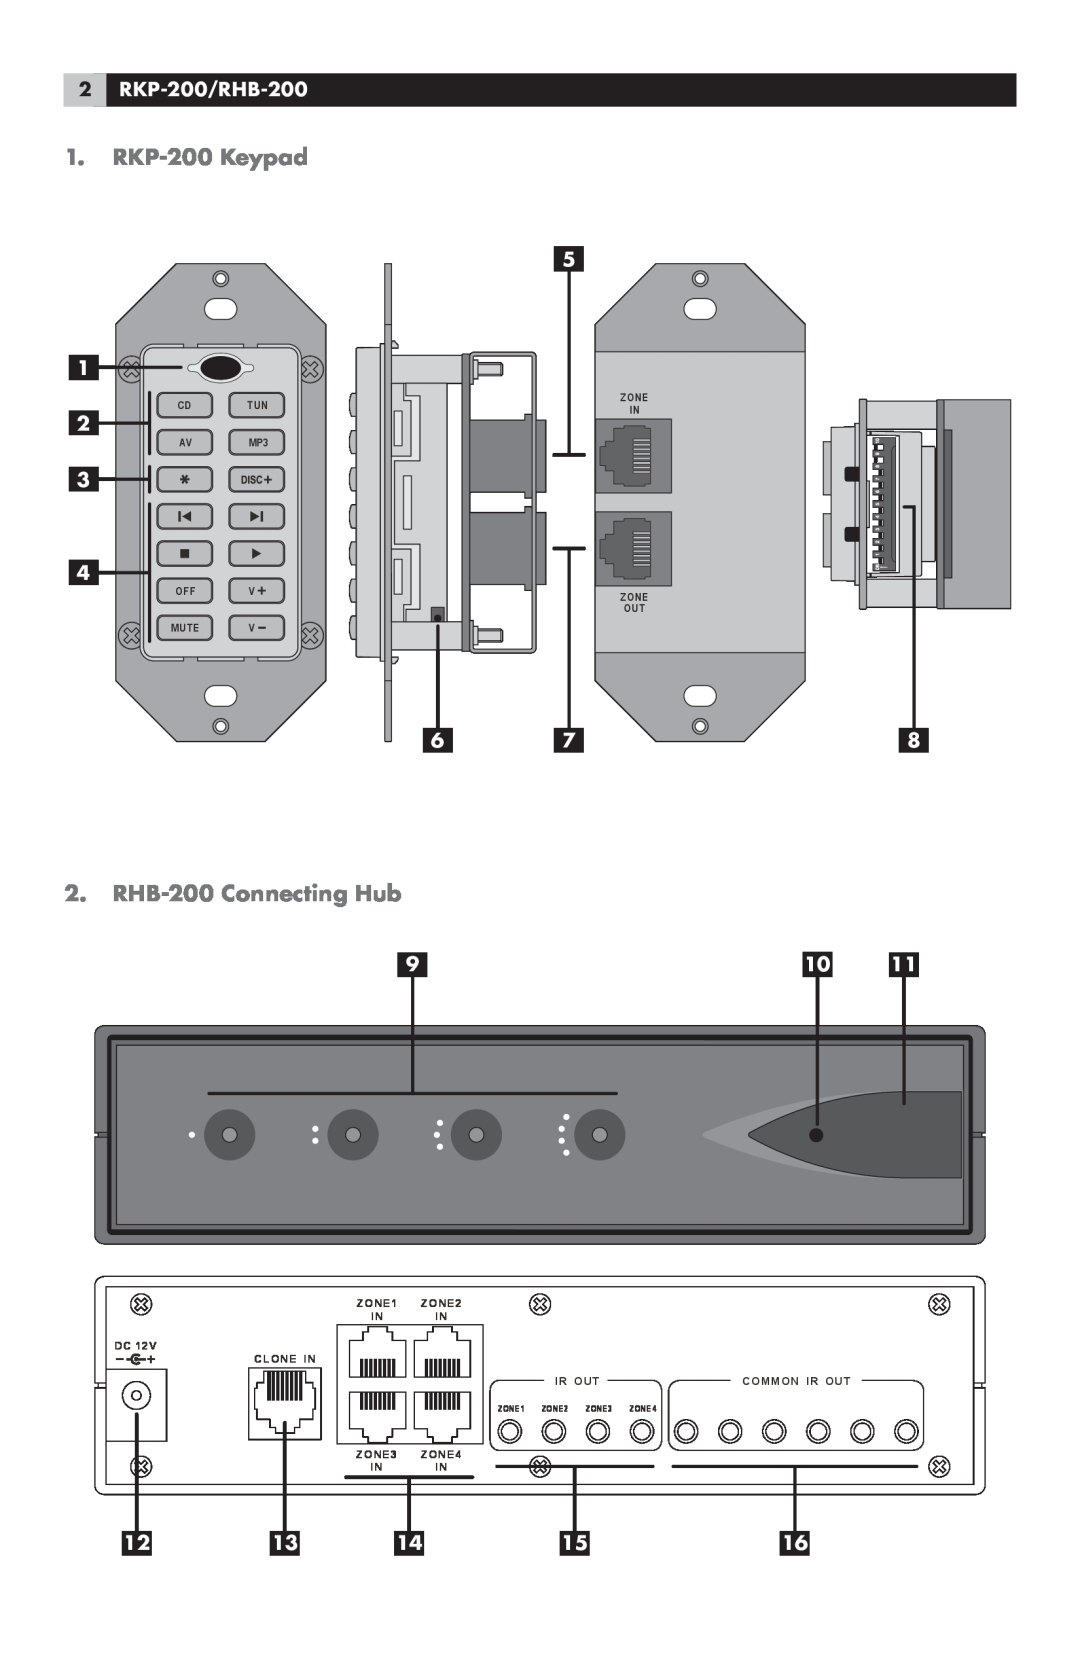 Rotel manual RKP-200 Keypad, RHB-200 Connecting Hub, RKP-200/RHB-200, ZONE2, Clone In, Common Ir Out, ZONE3, ZONE4 